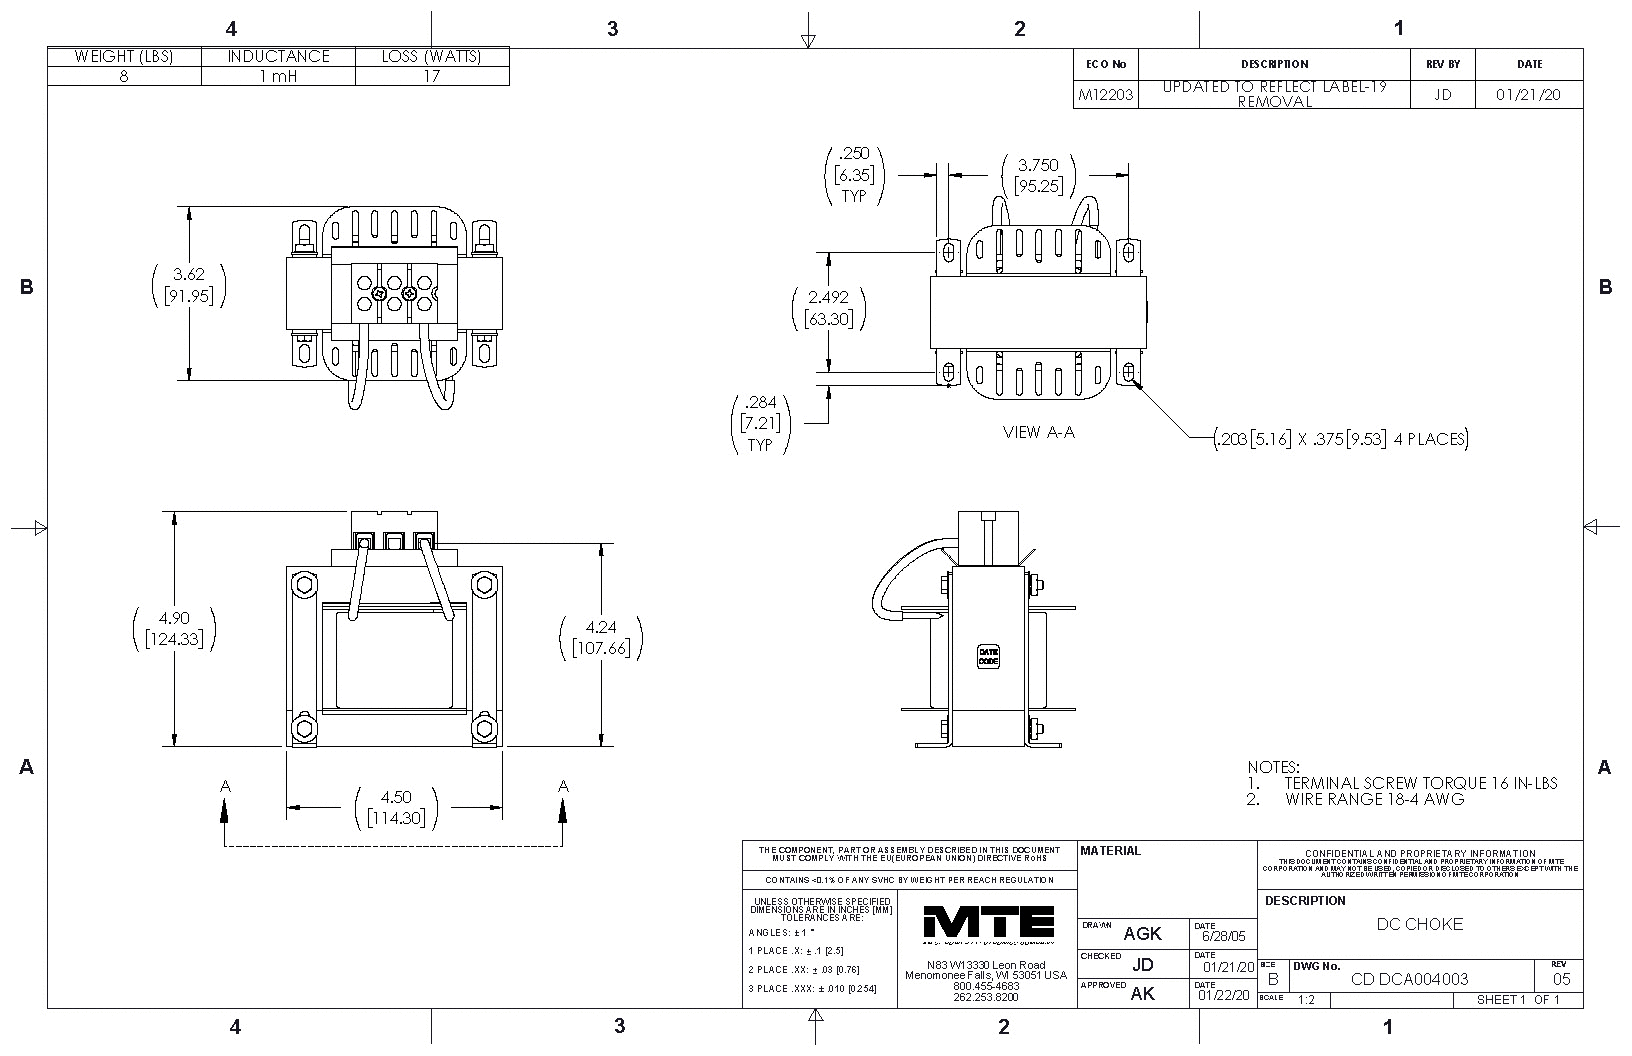 Drawings of MTE DC Link Choke DCA004003